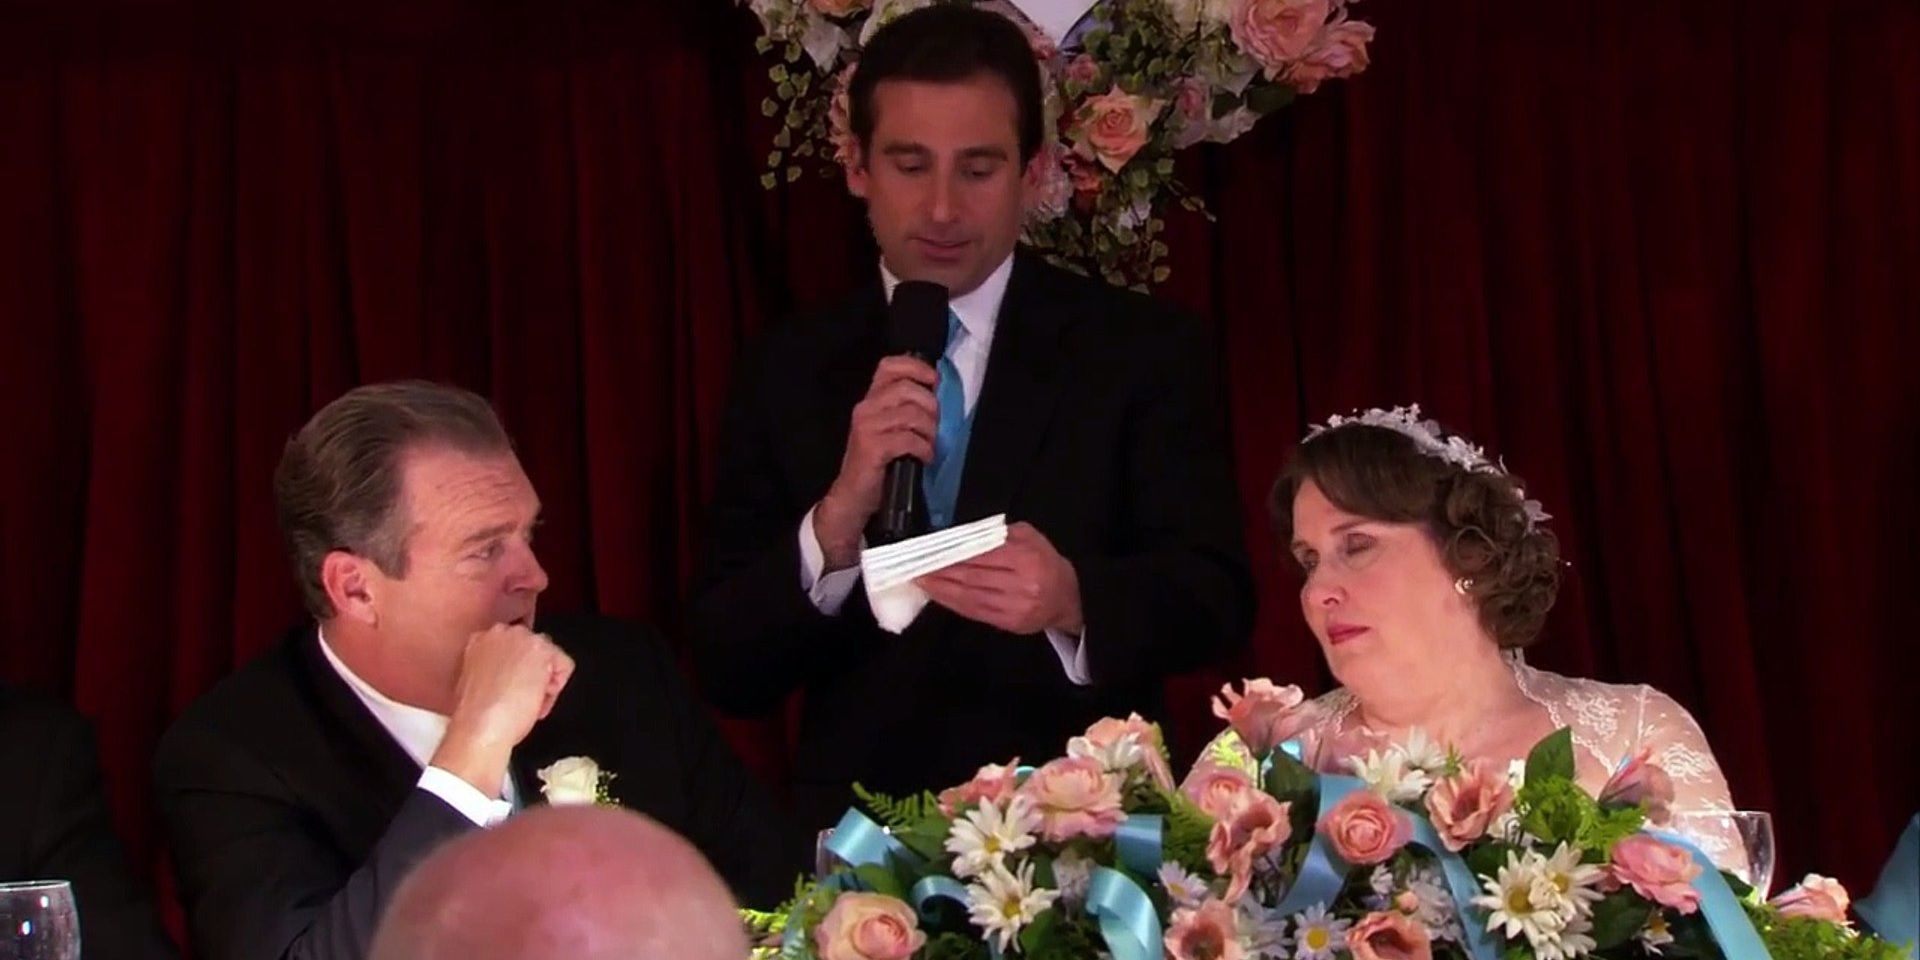 Michael's wedding speech in The Office